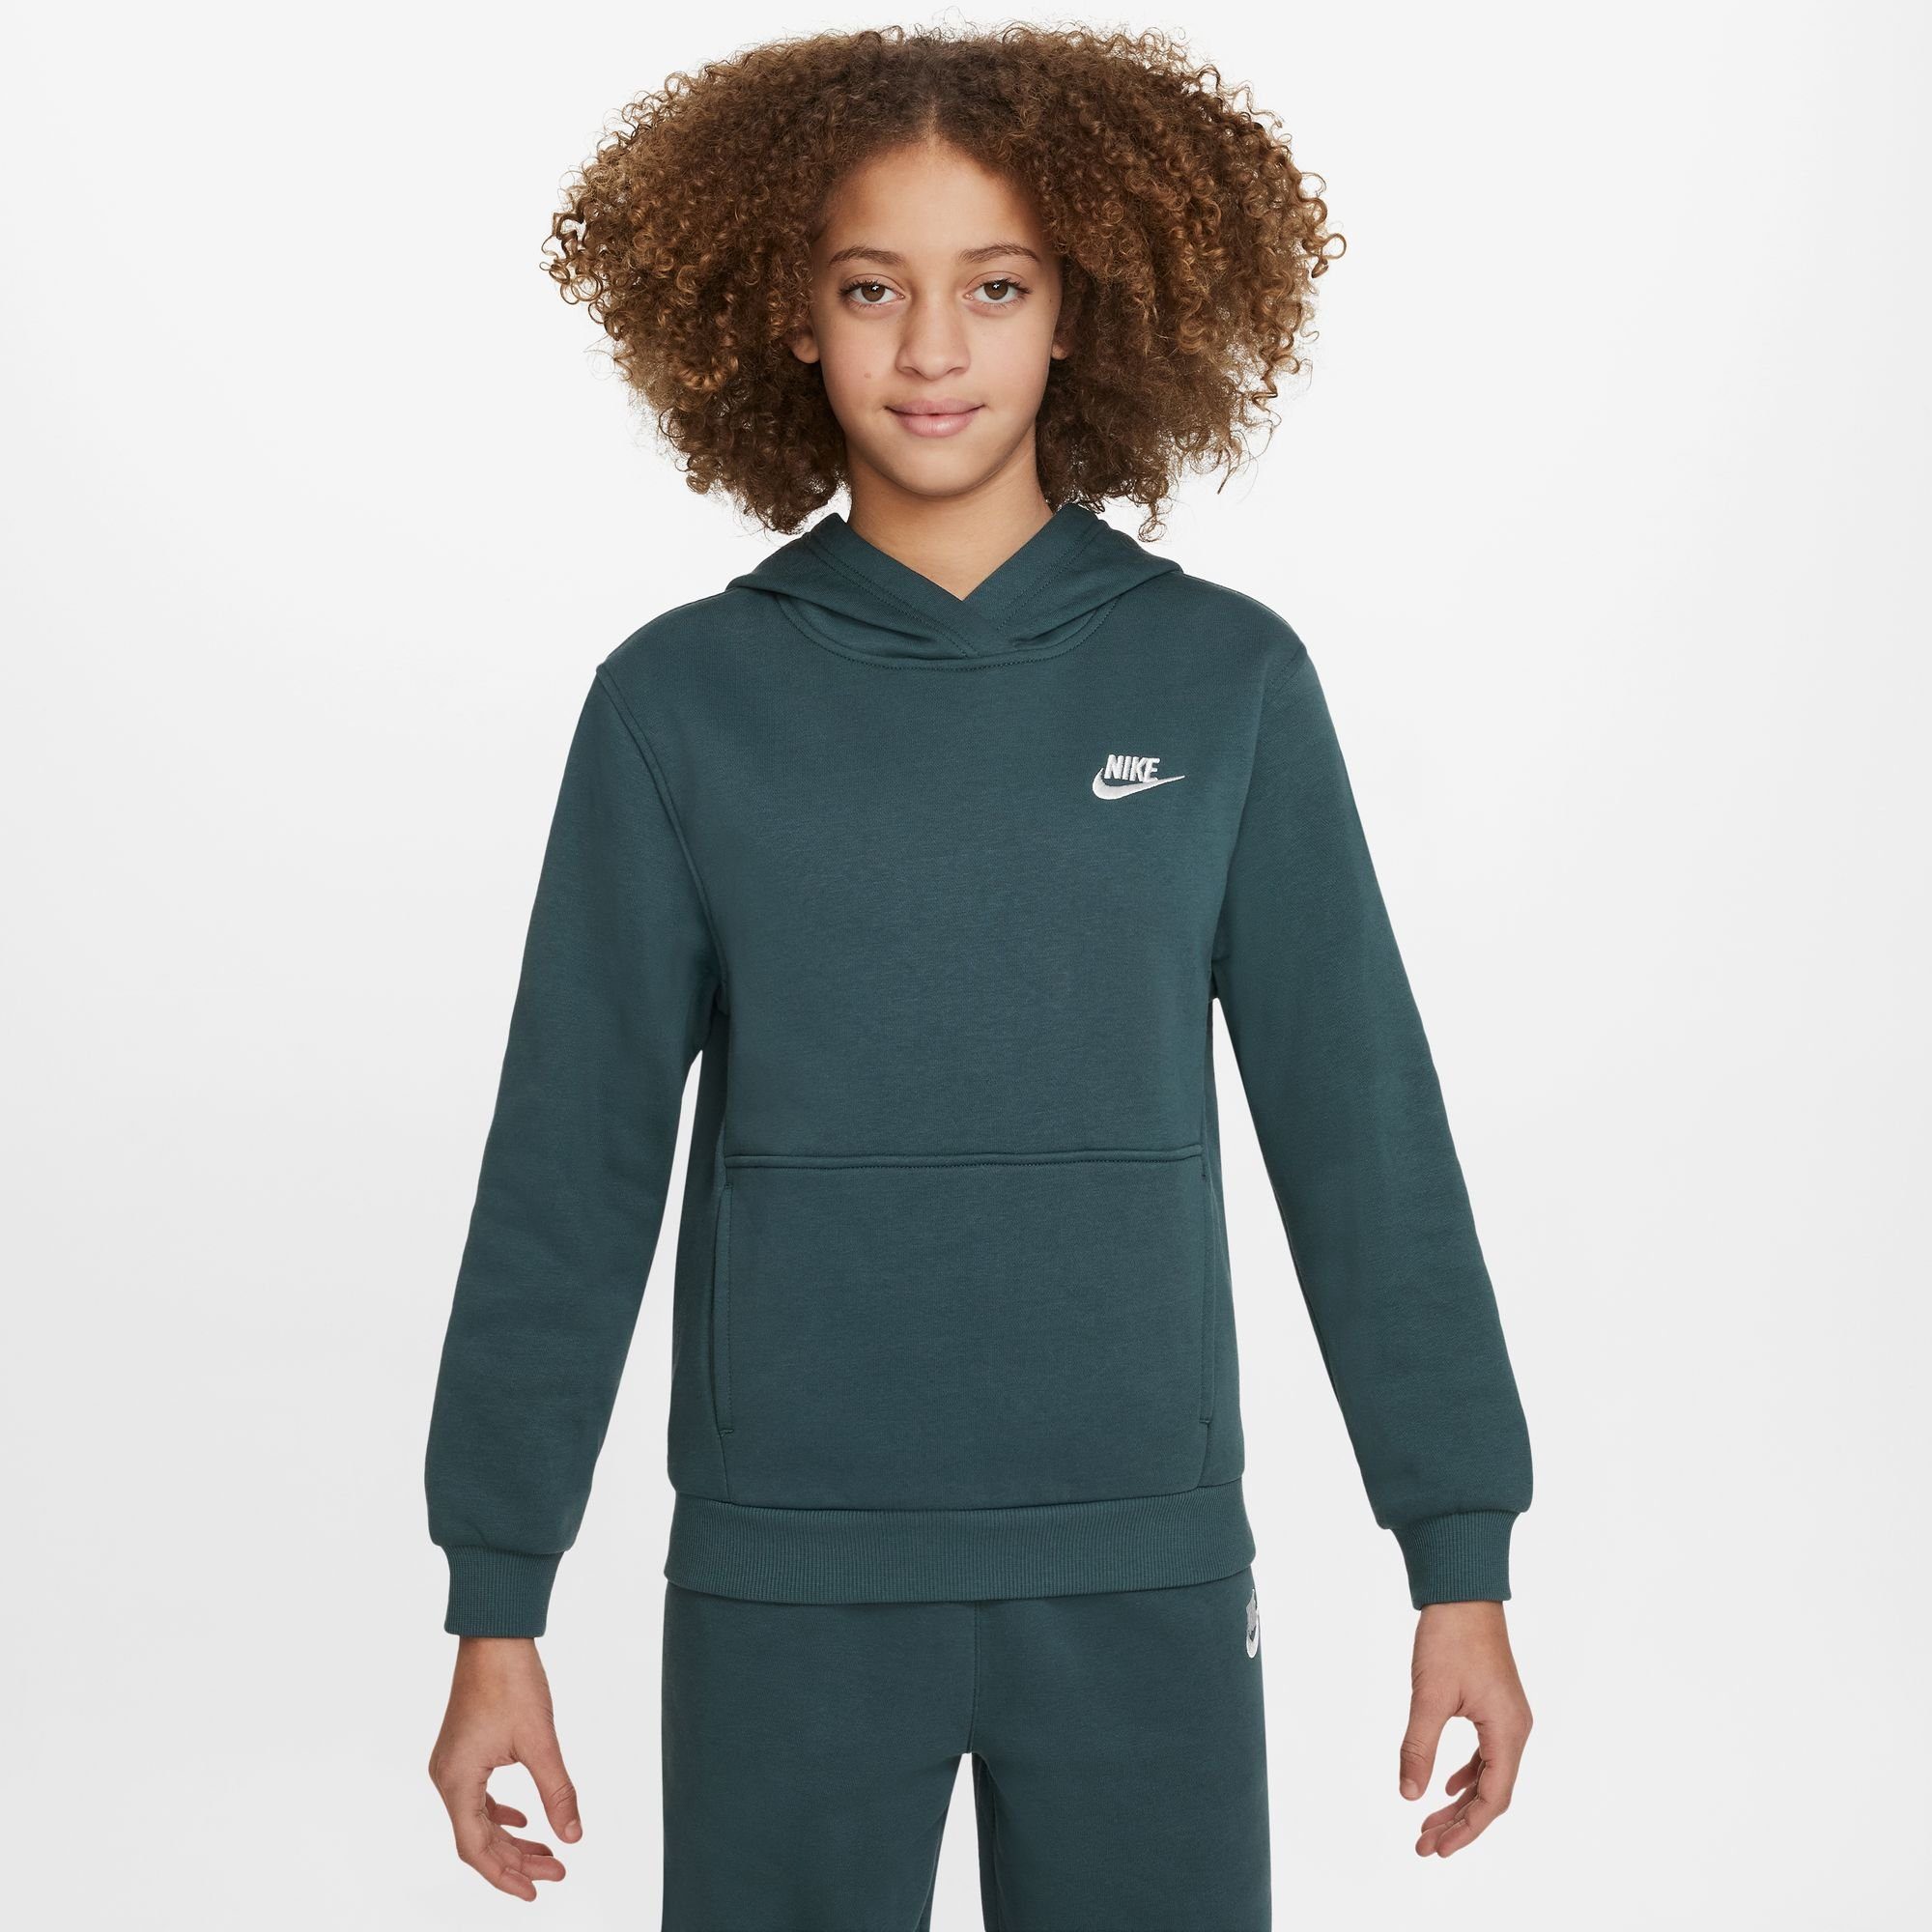 FLEECE JUNGLE/WHITE DEEP CLUB Nike KID'S HOODIE Sportswear BIG PULLOVER Kapuzensweatshirt